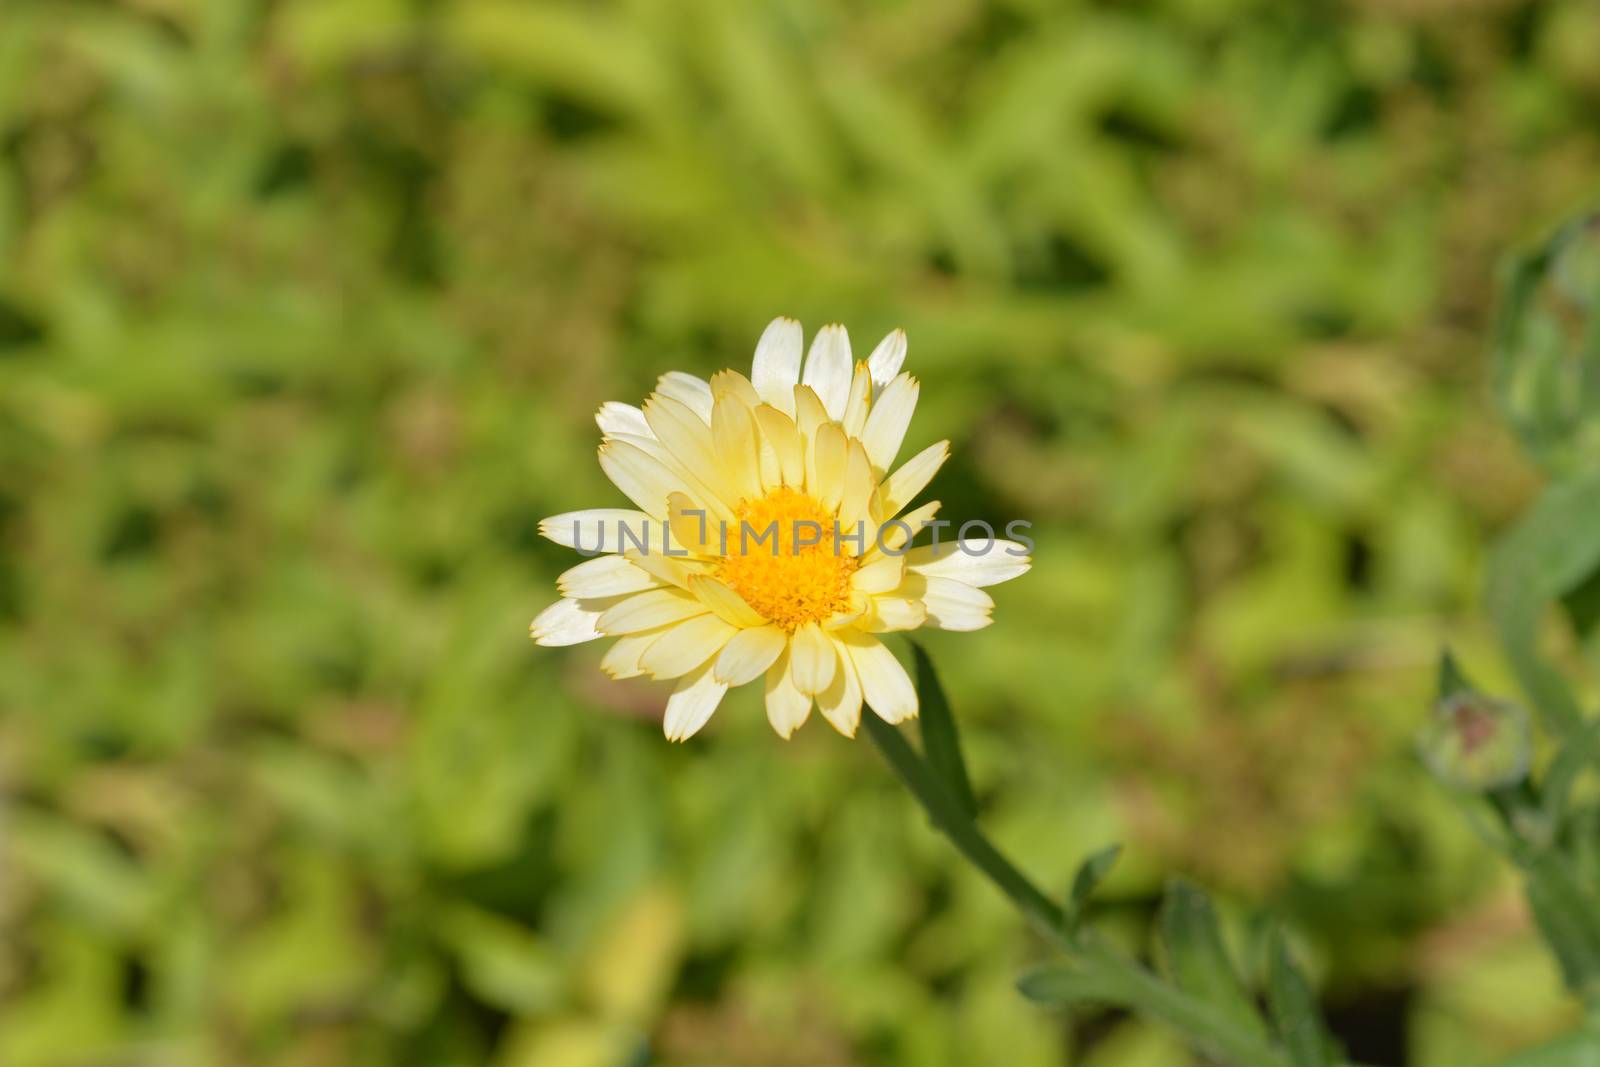 Garden marigold - Latin name - Calendula officinalis